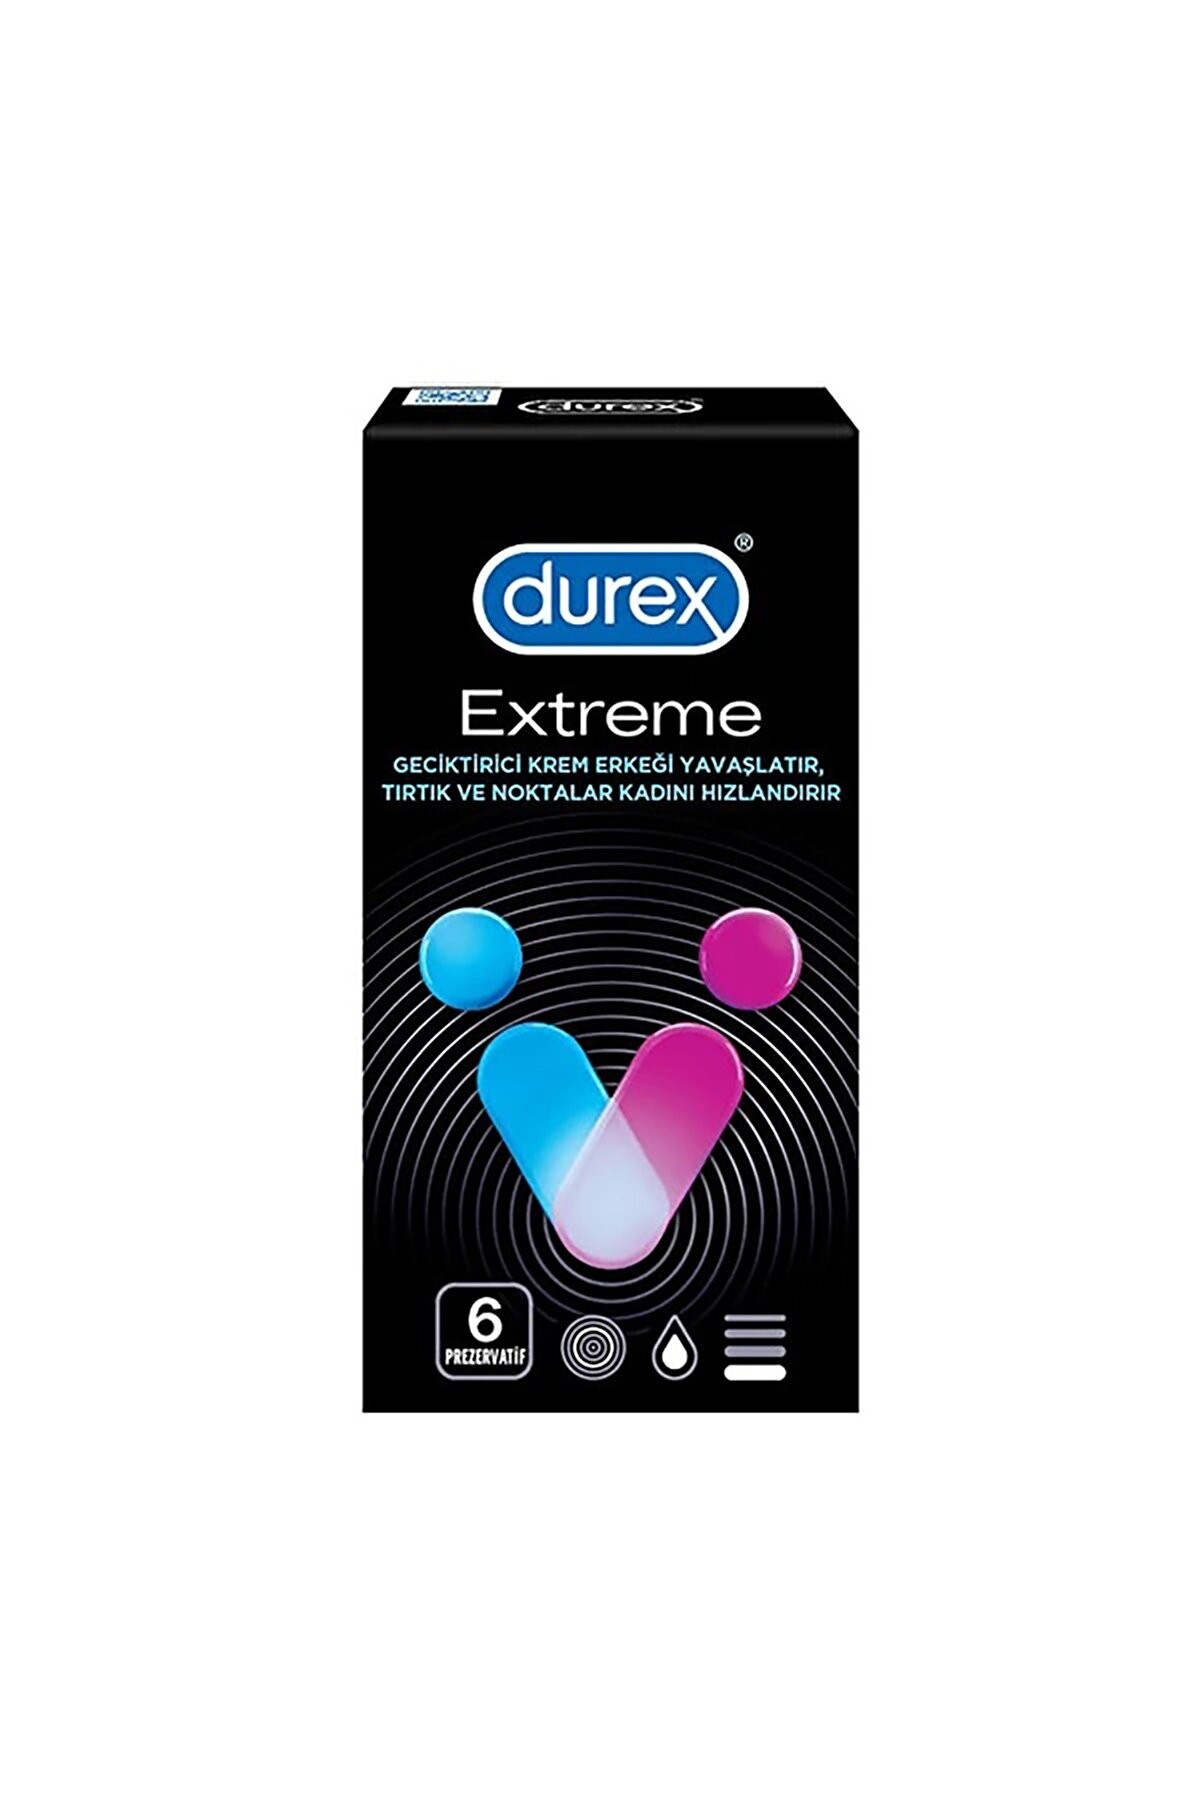 Outlet - Durex Extreme Prezervatif 6 Adet (S.K.T 11-2024)